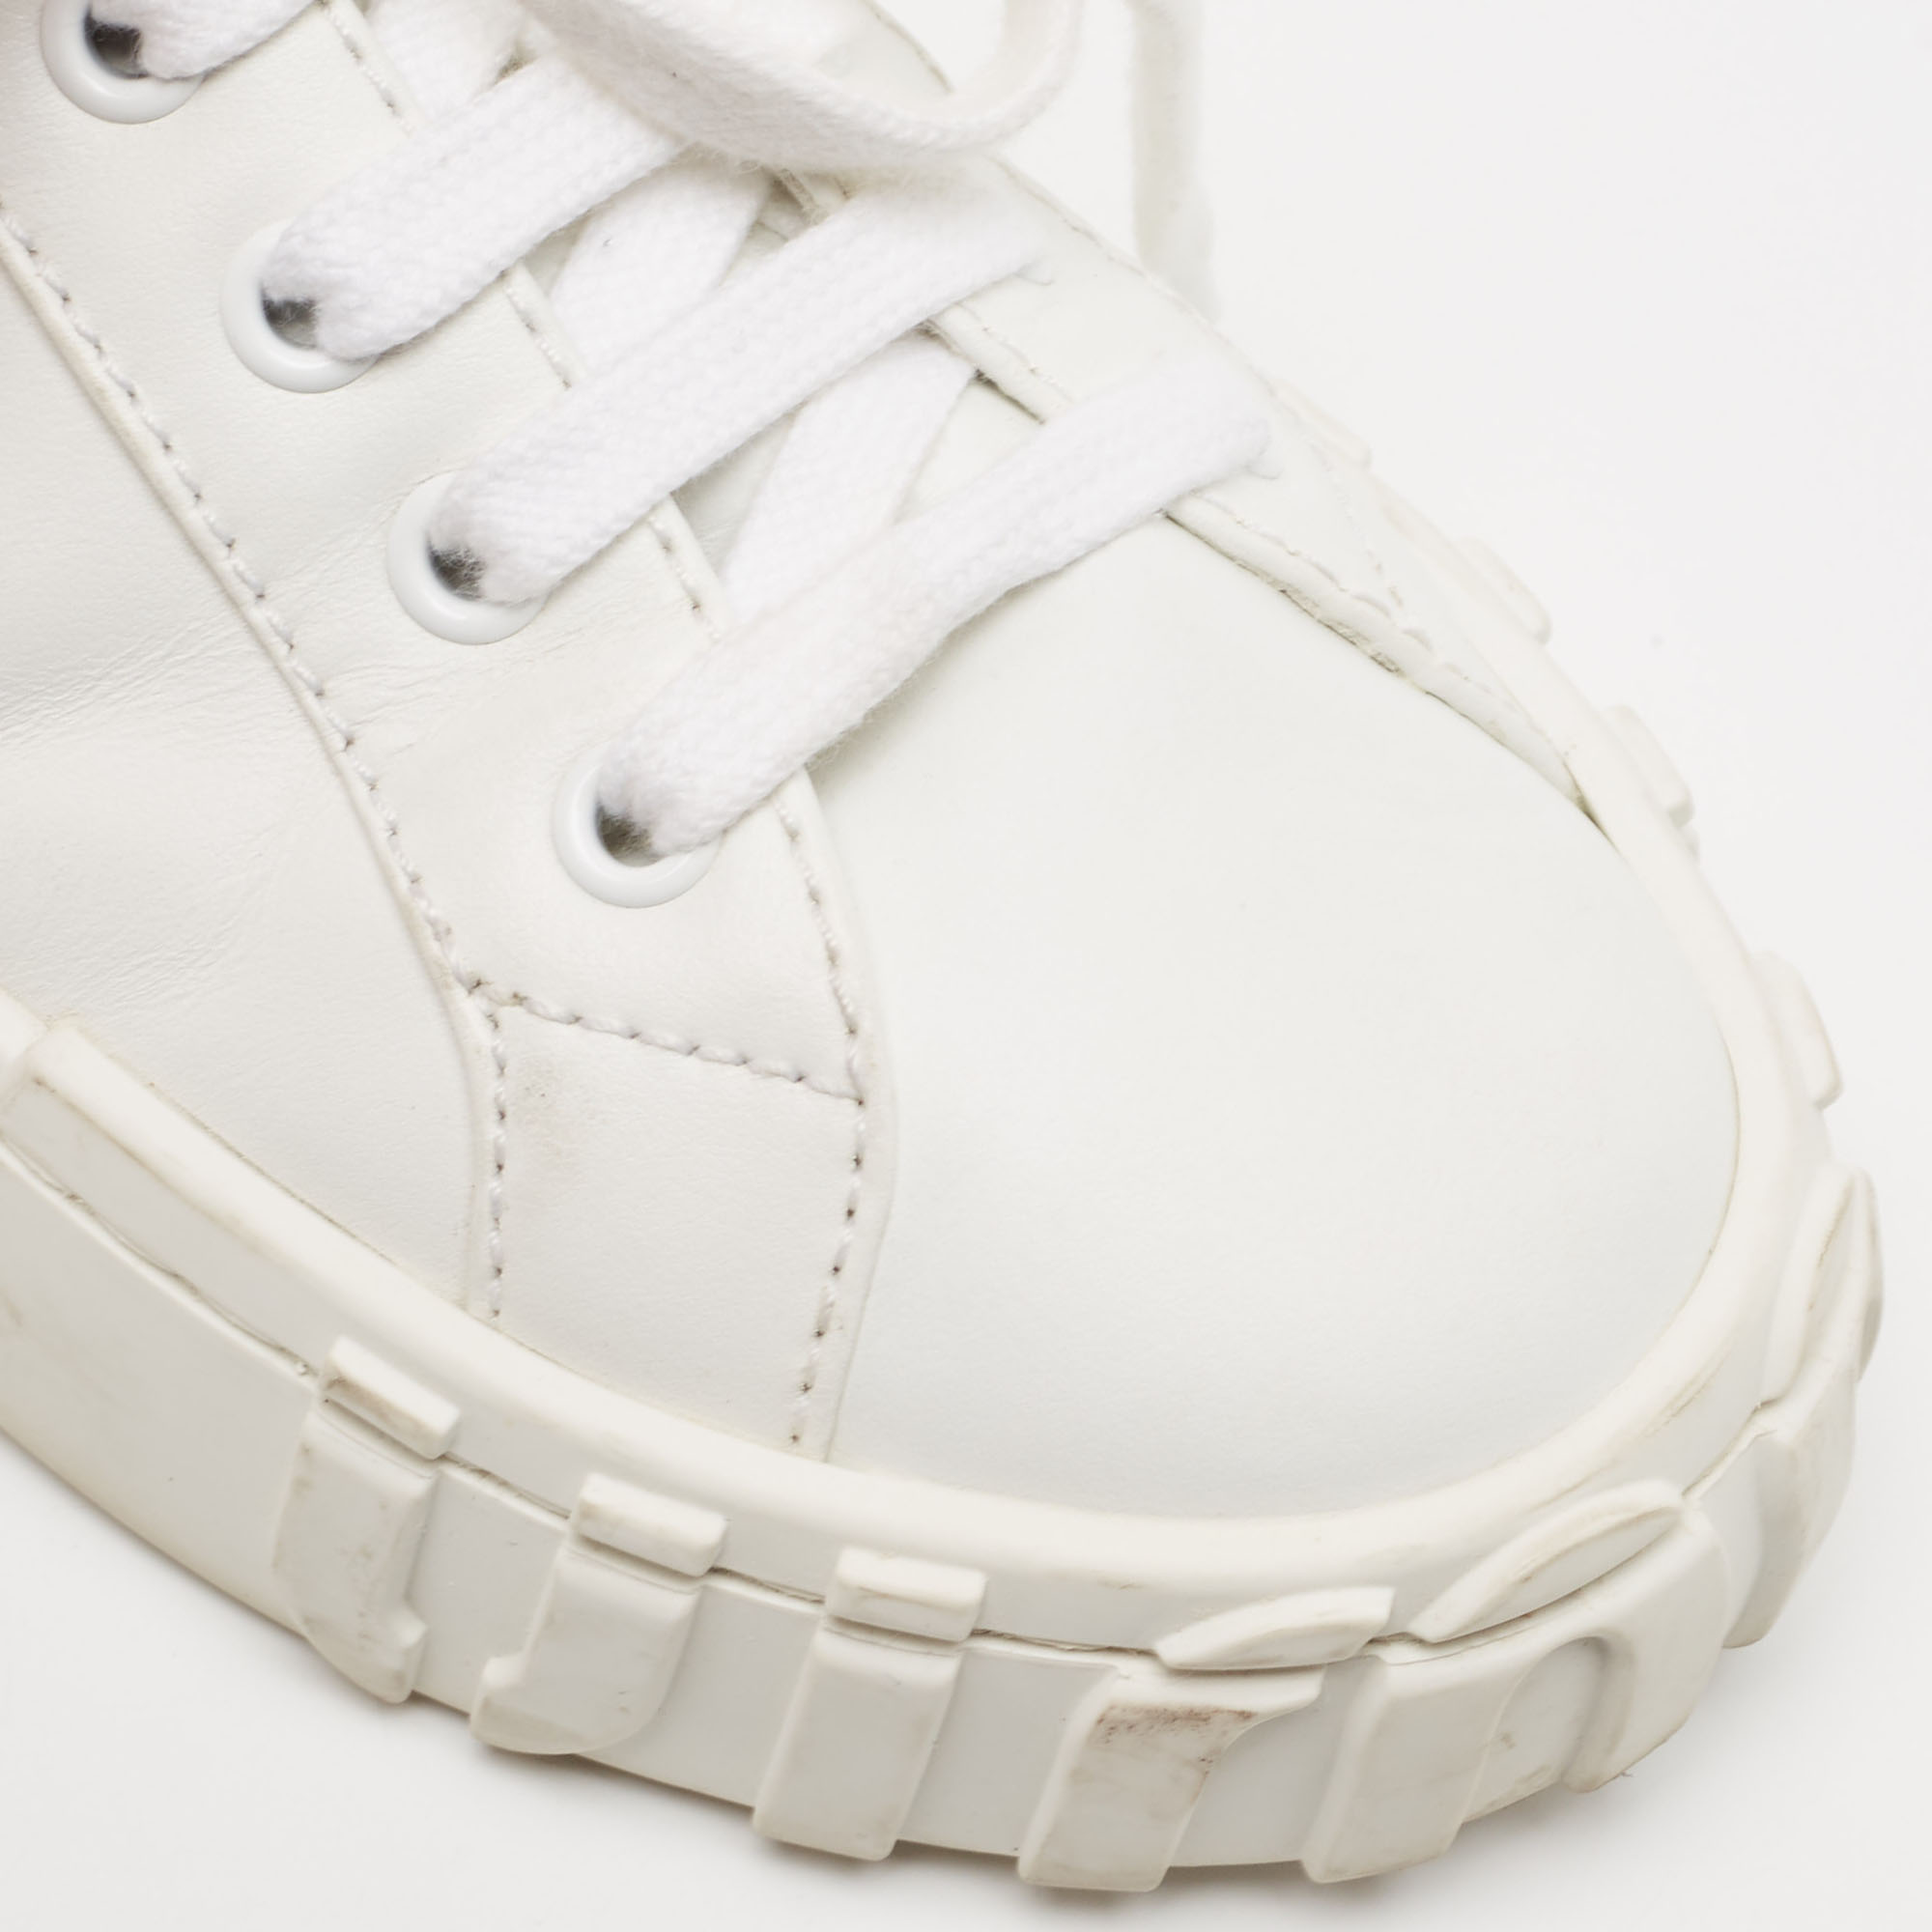 Miu Miu White Leather Low Top Sneakers Size 36